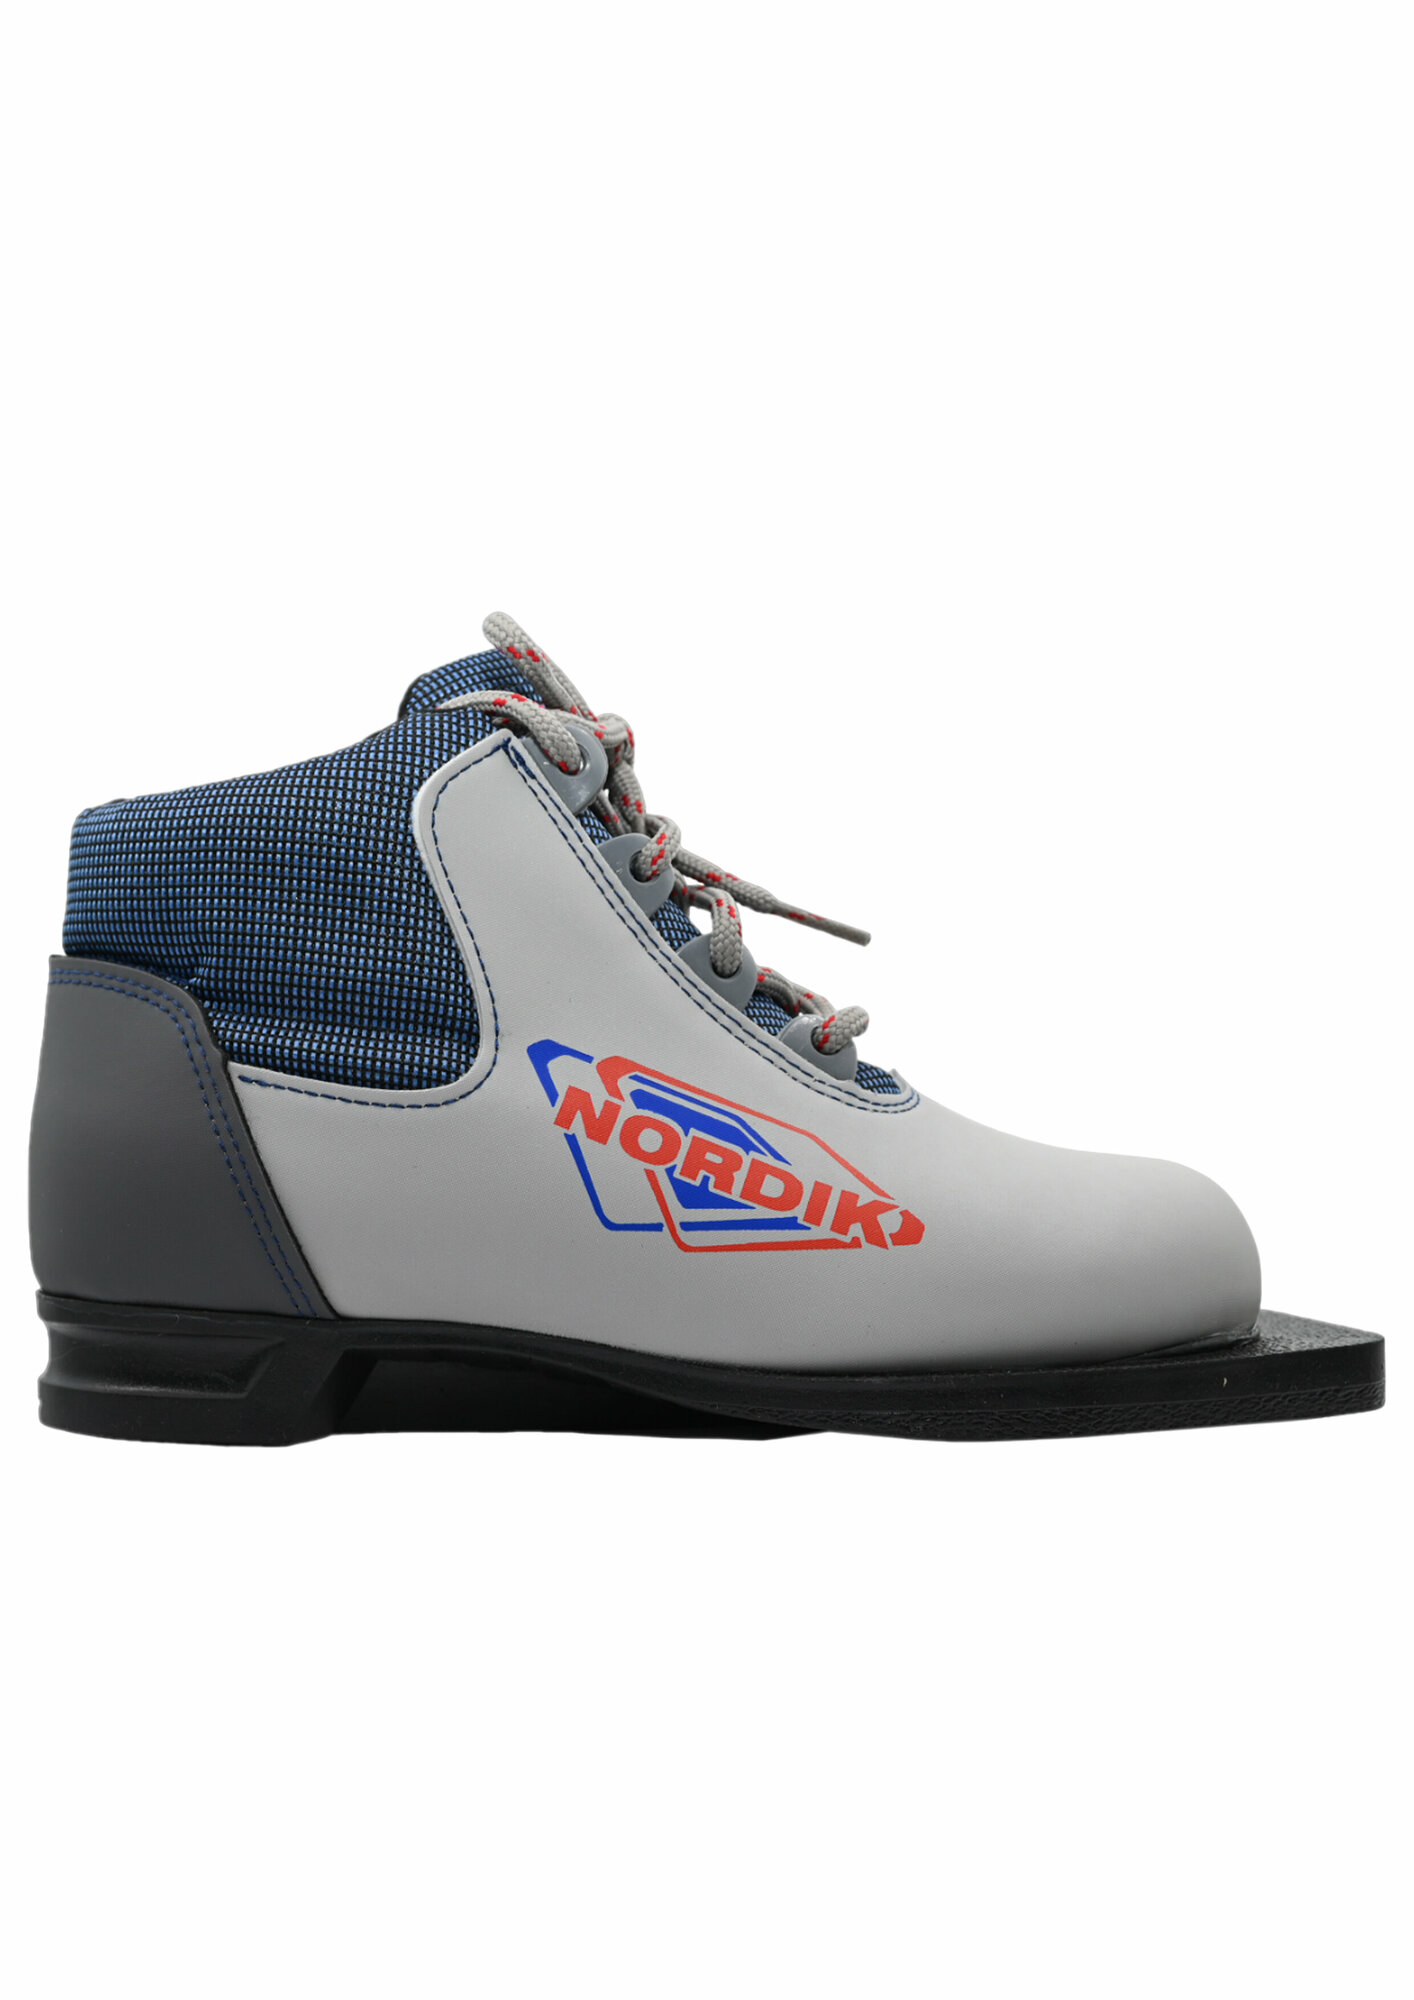 Лыжные ботинки NN75 мм SPINE NORDIK 32 размер